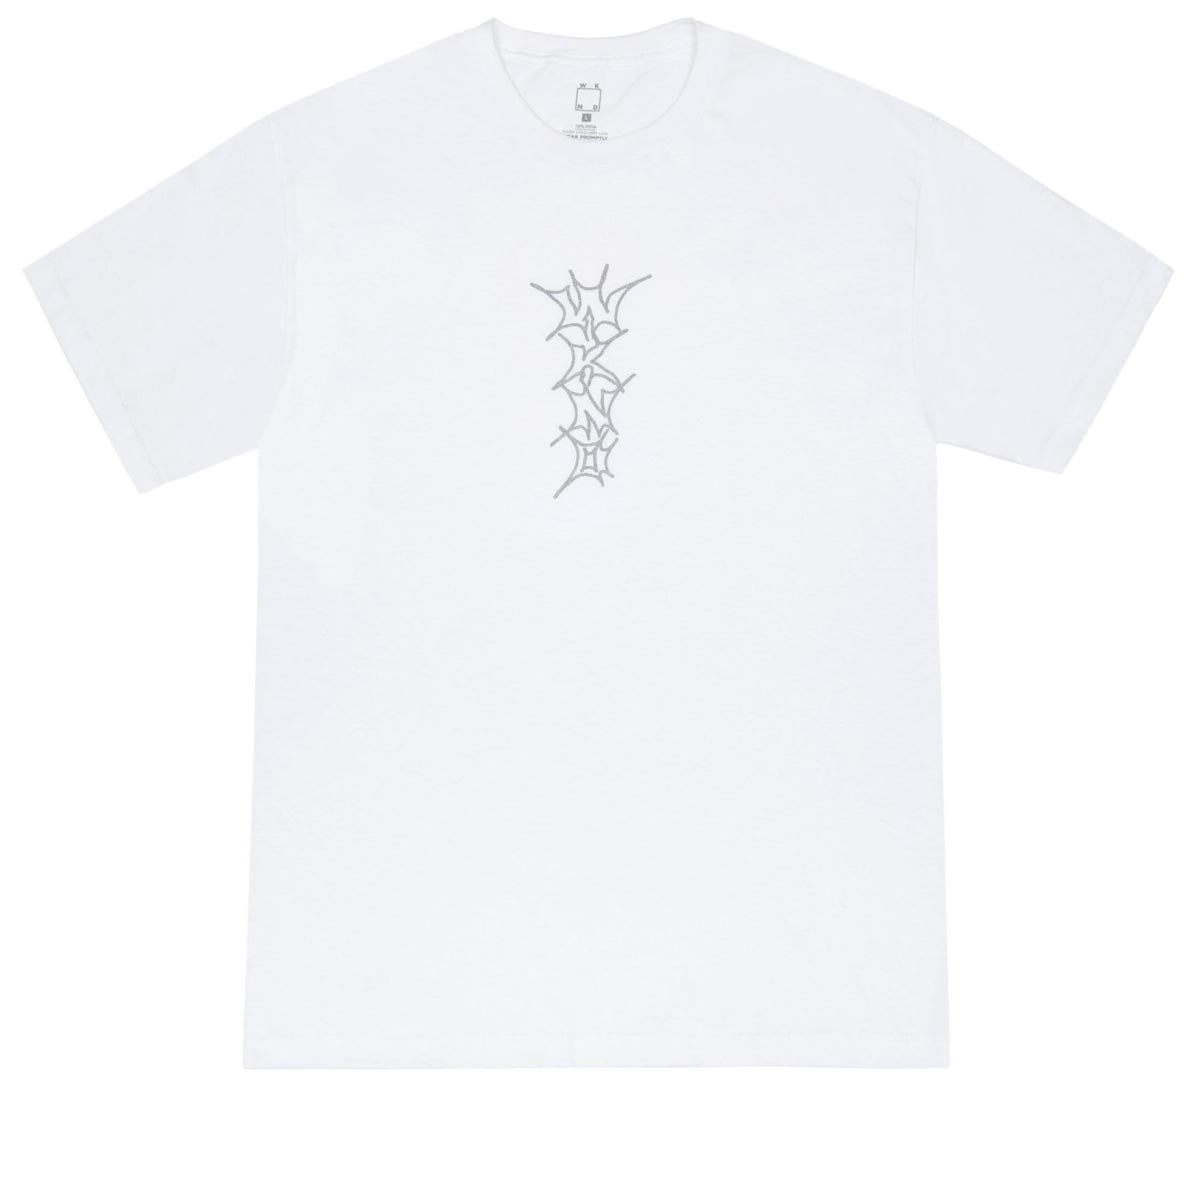 WKND Guardian T-Shirt - White image 1